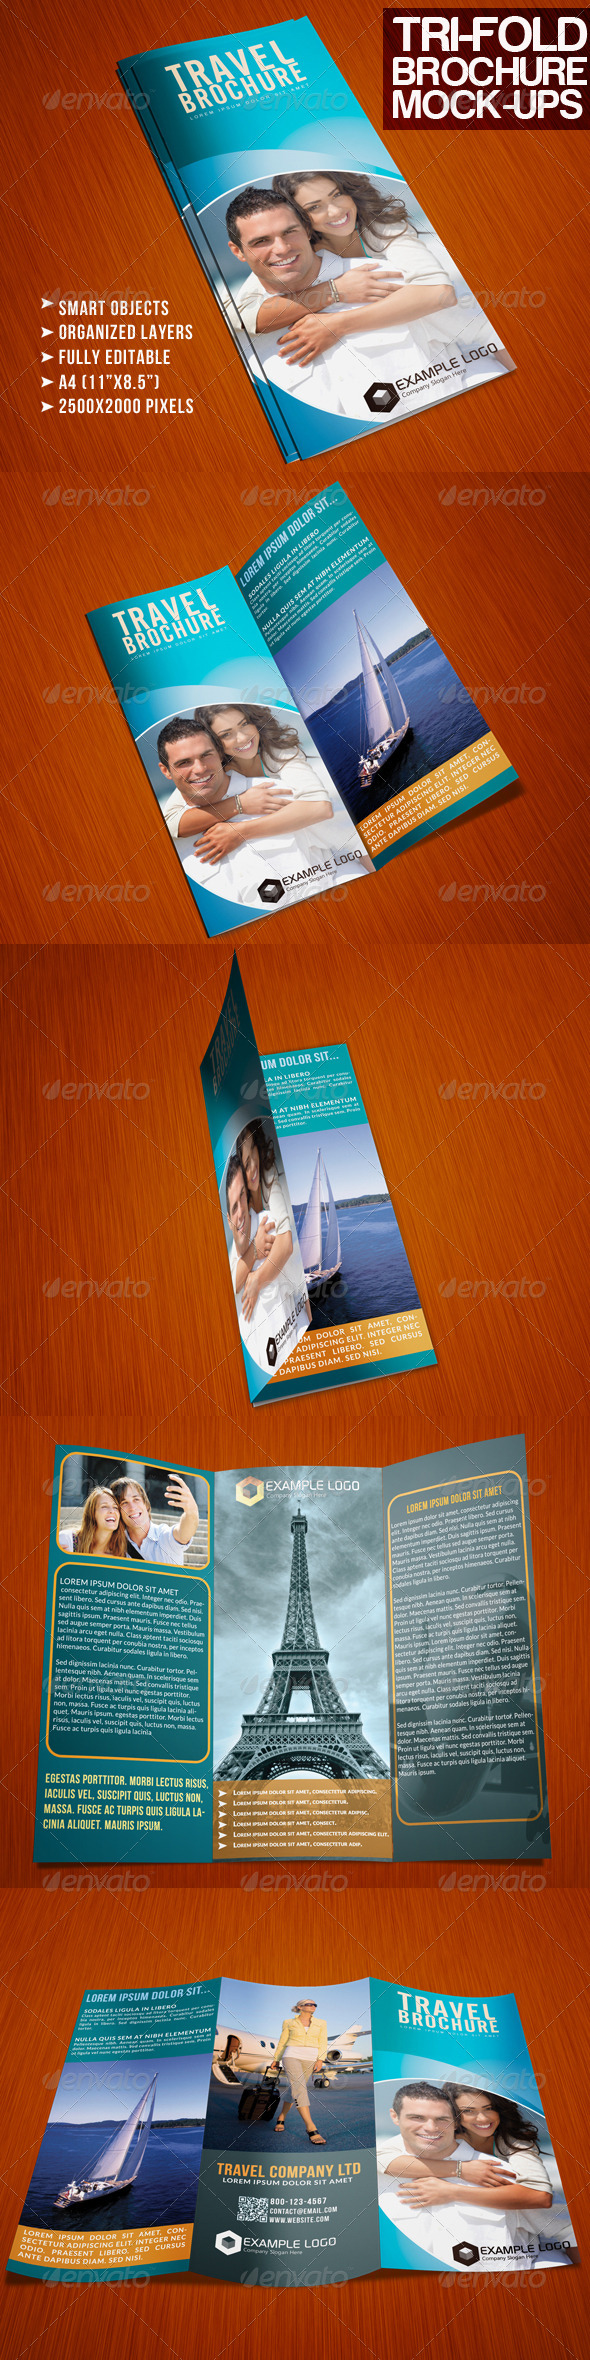 Download A4 Brochure Template Psd Graphics Designs Templates PSD Mockup Templates